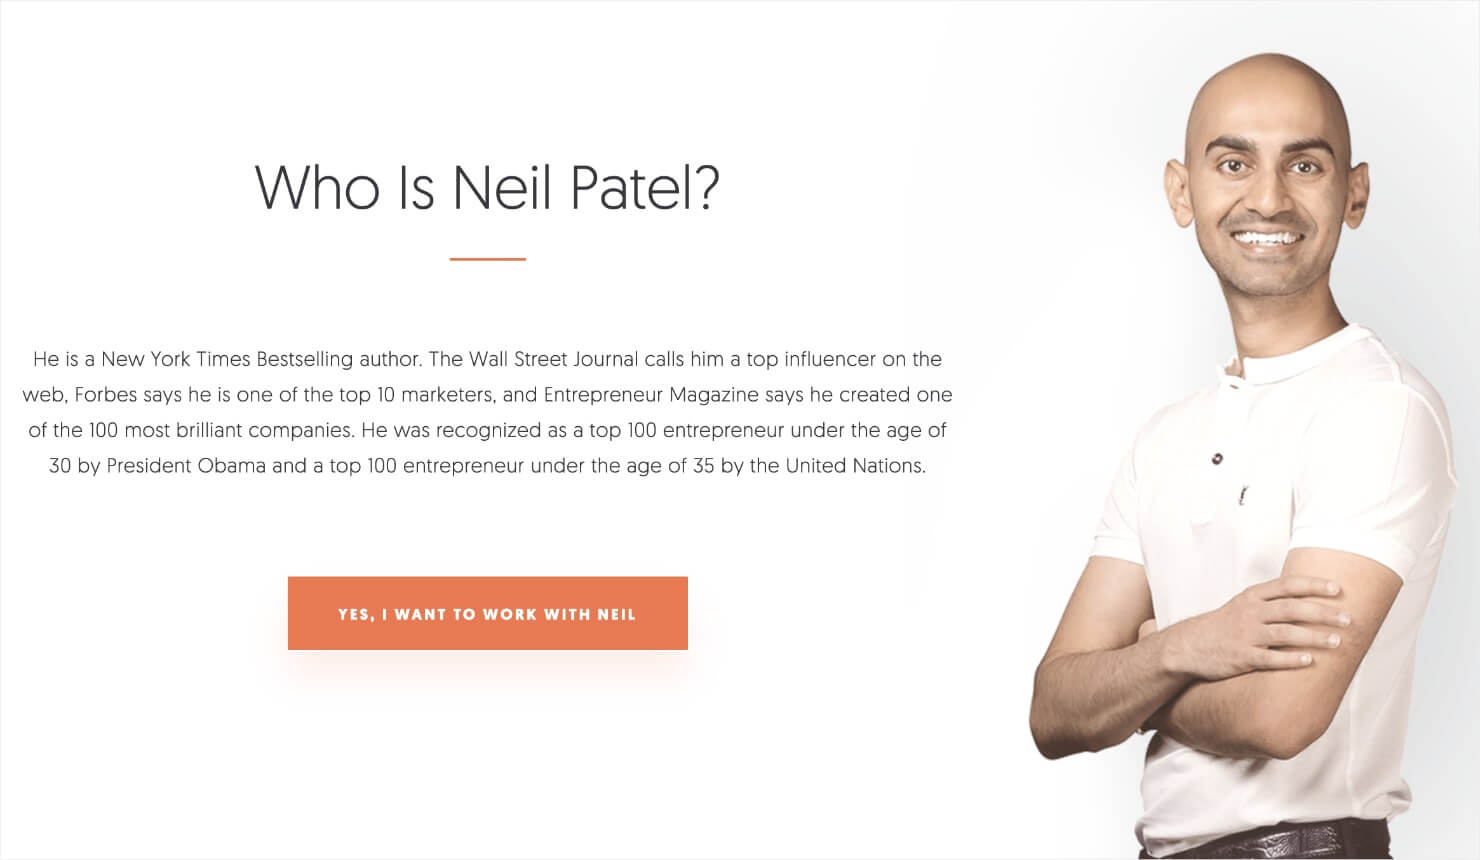 neil patel website